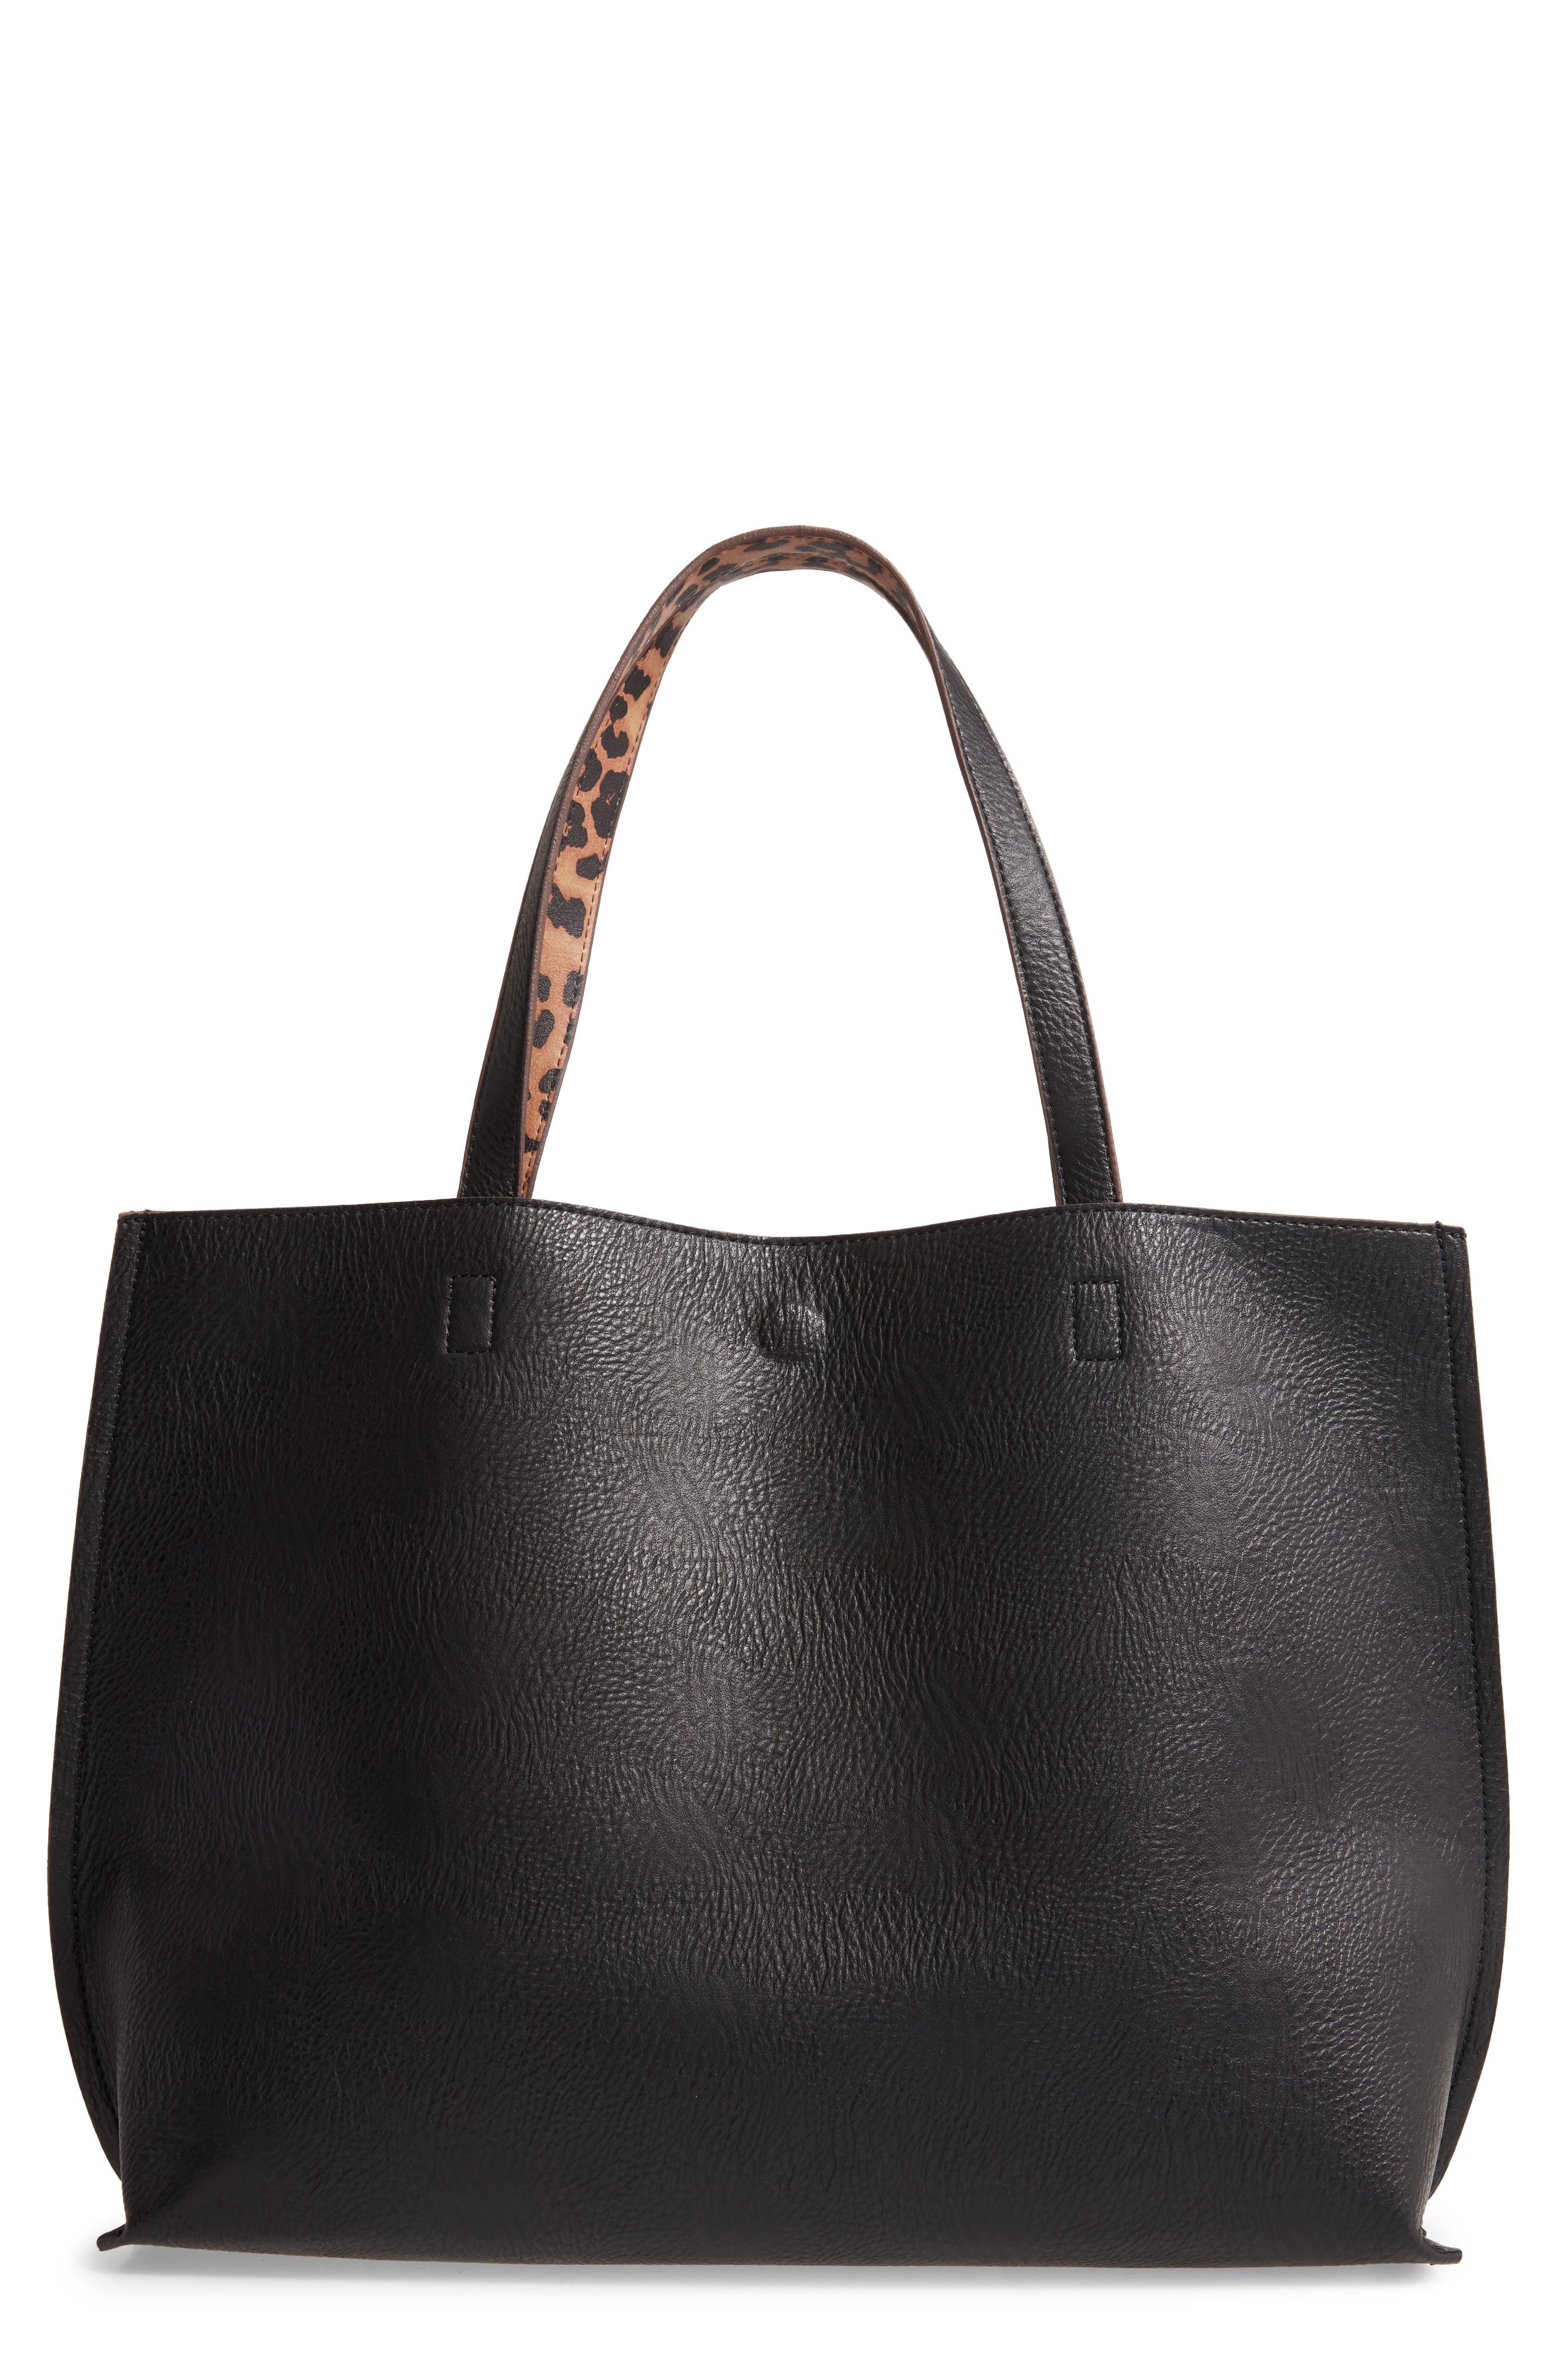 Handbags for Women Shoulder Handbags Large Ladies Faux Leather Tote Bags Top Handle Bags for Women Girls Black